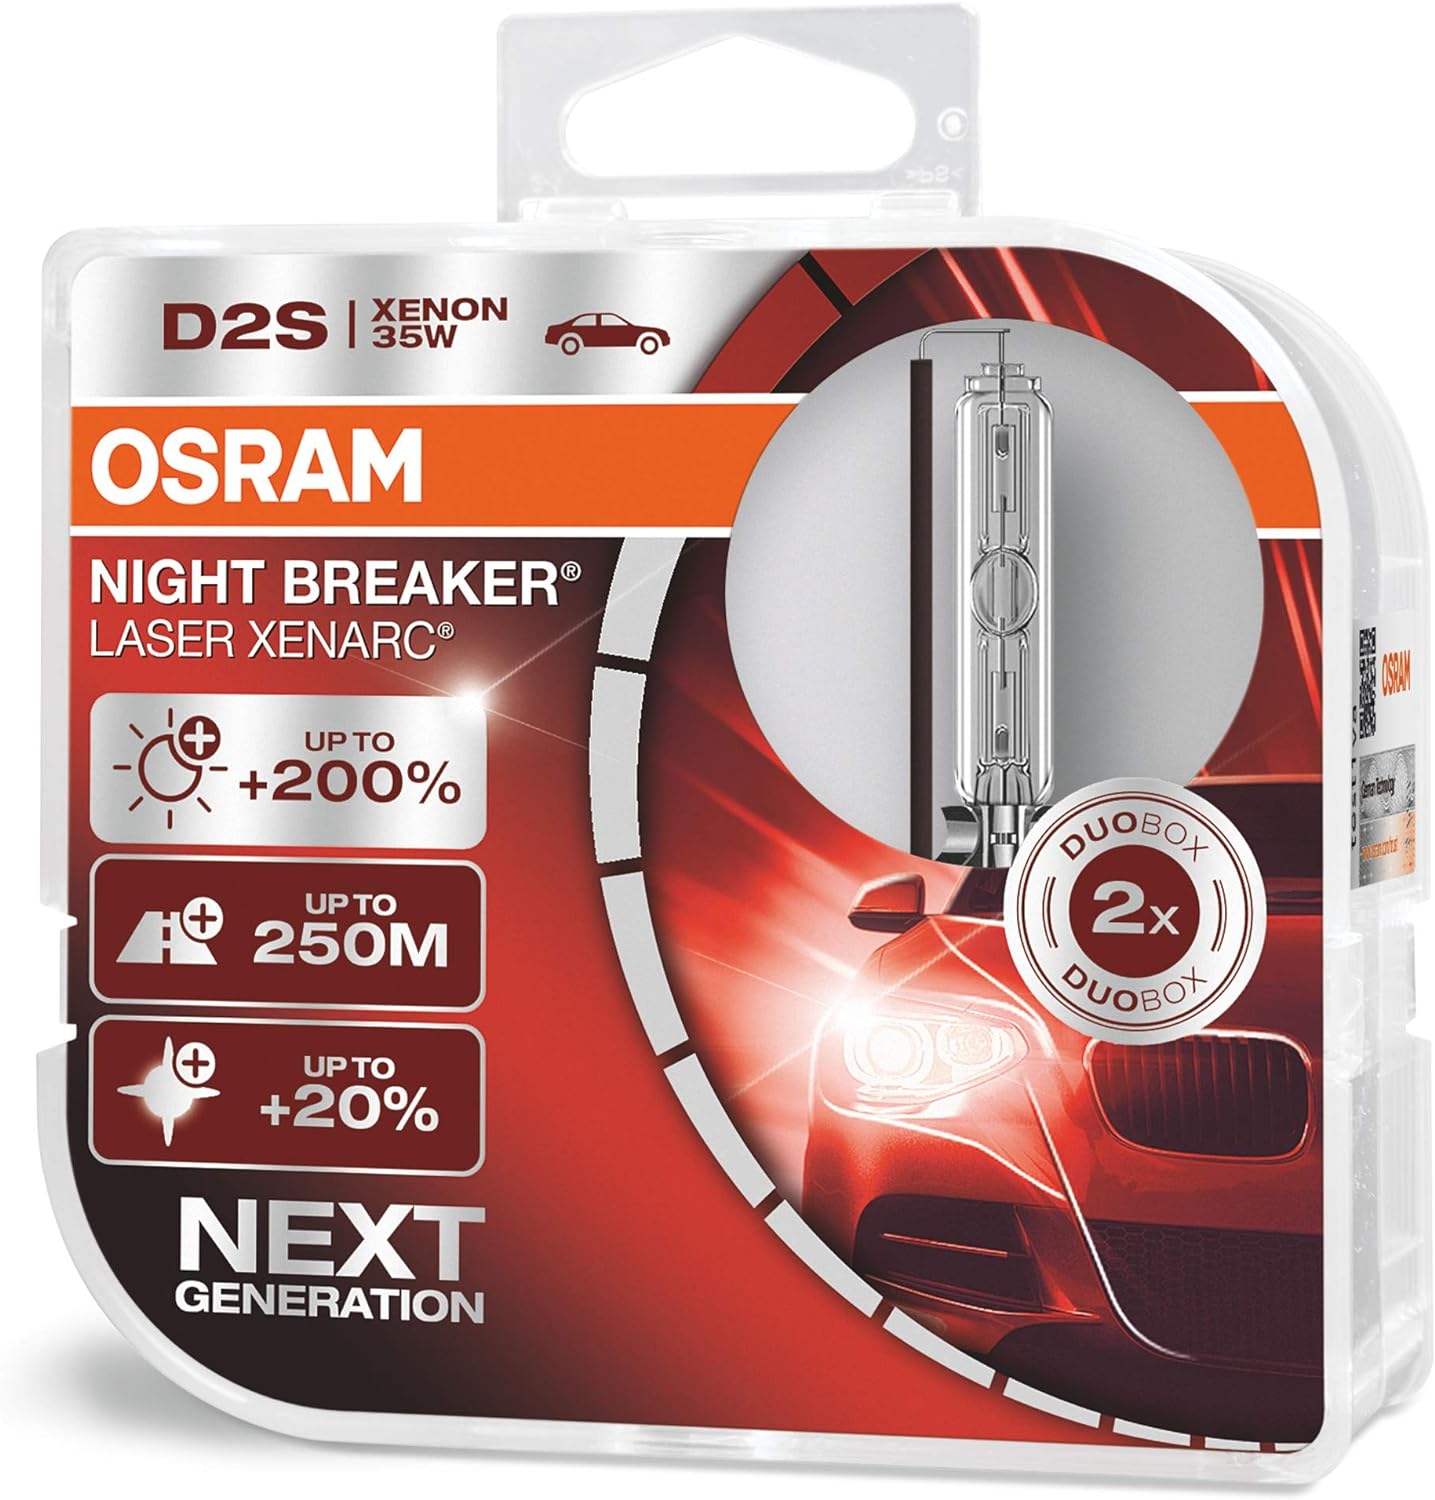 OSRAM Xenarc Night Breaker Laser D2S Xenon Car Headlight Bulbs -1281